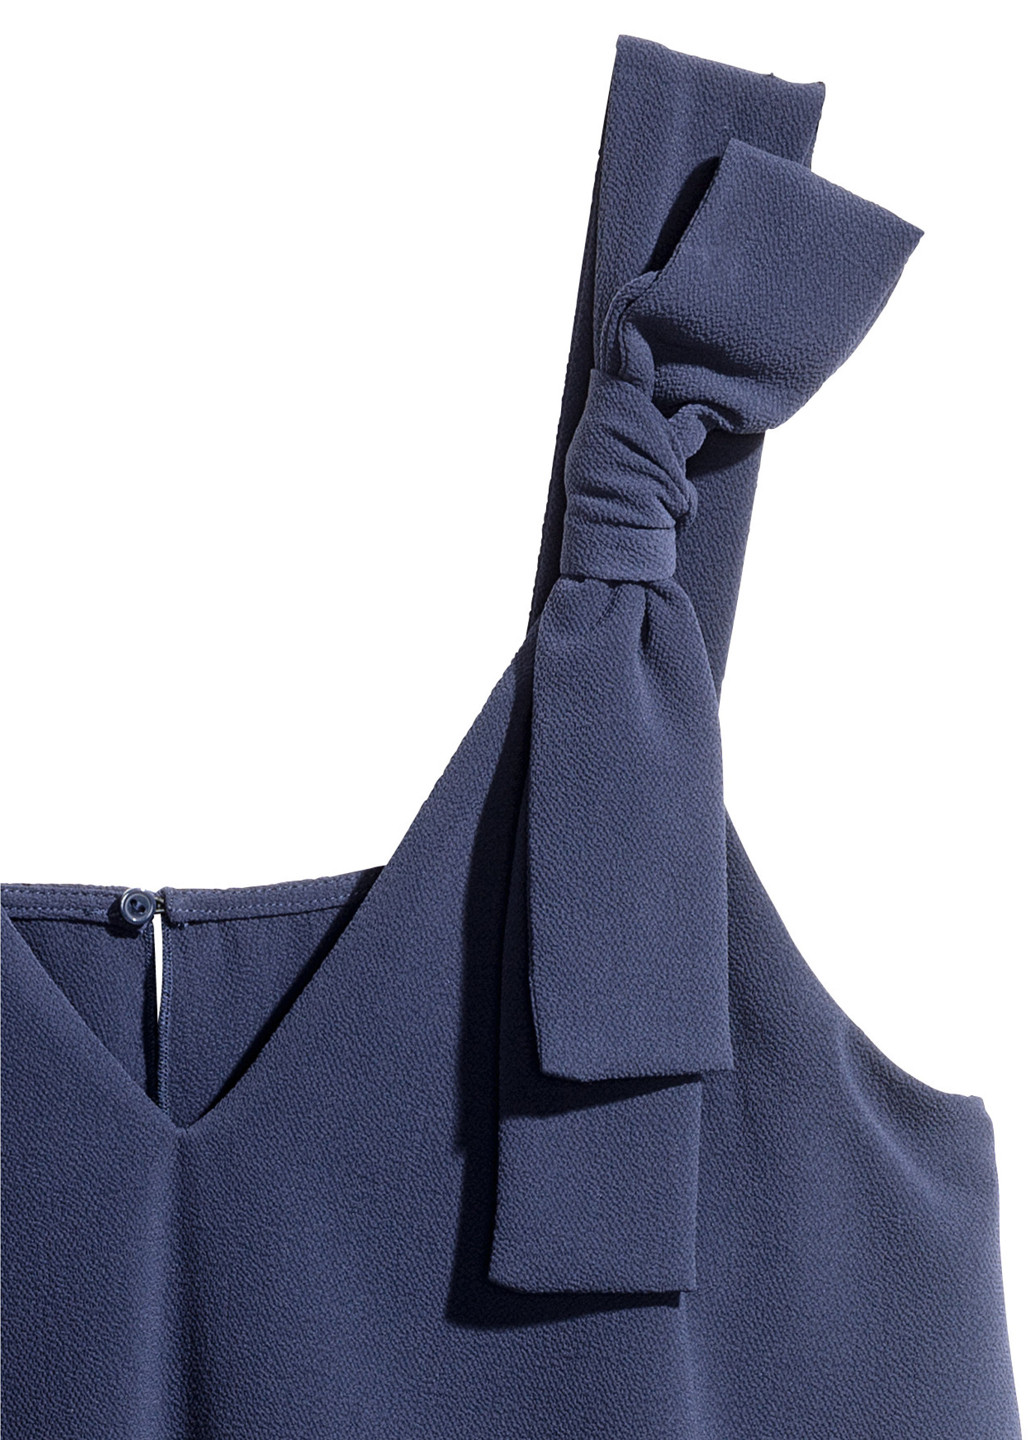 Комбинезон H&M комбинезон-шорты однотонный синий кэжуал полиэстер